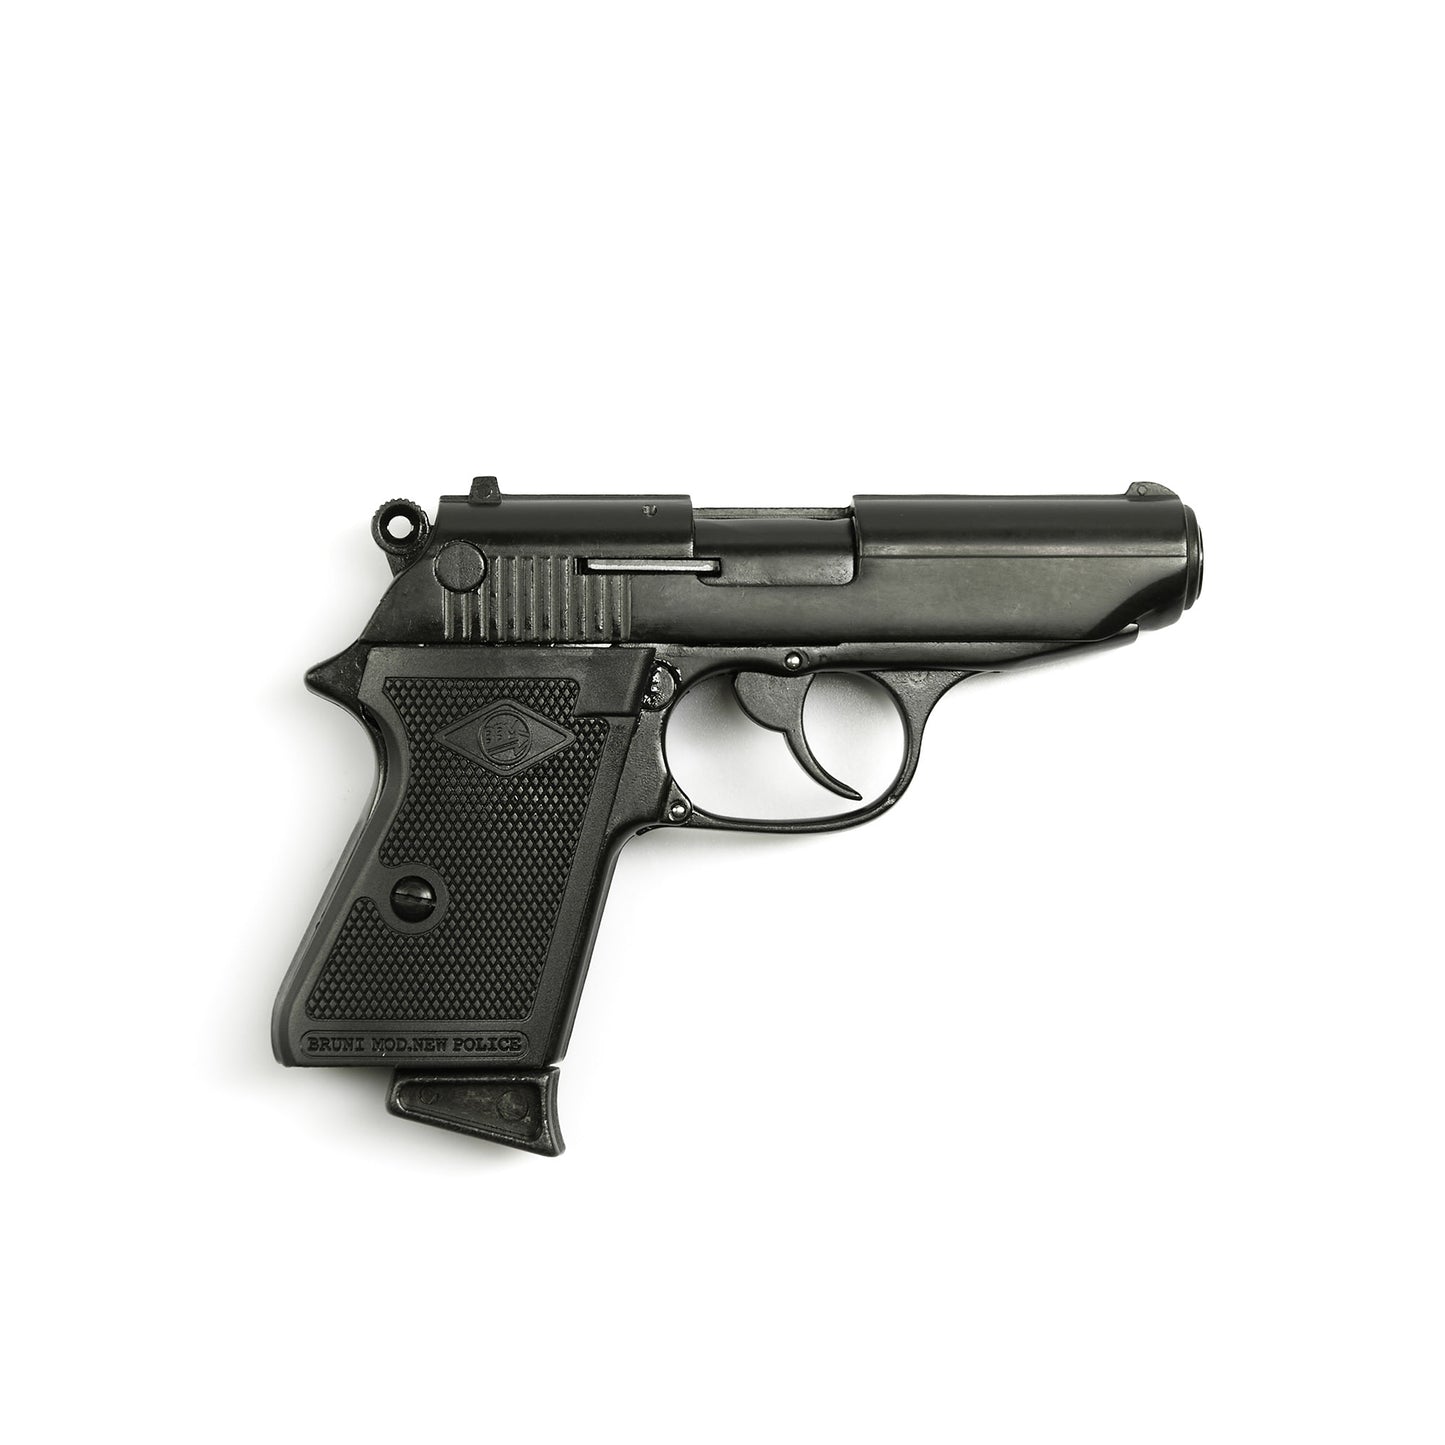 Replica James Bond Style Black 8MM Blank Firing Automatic Gun - Black Finish